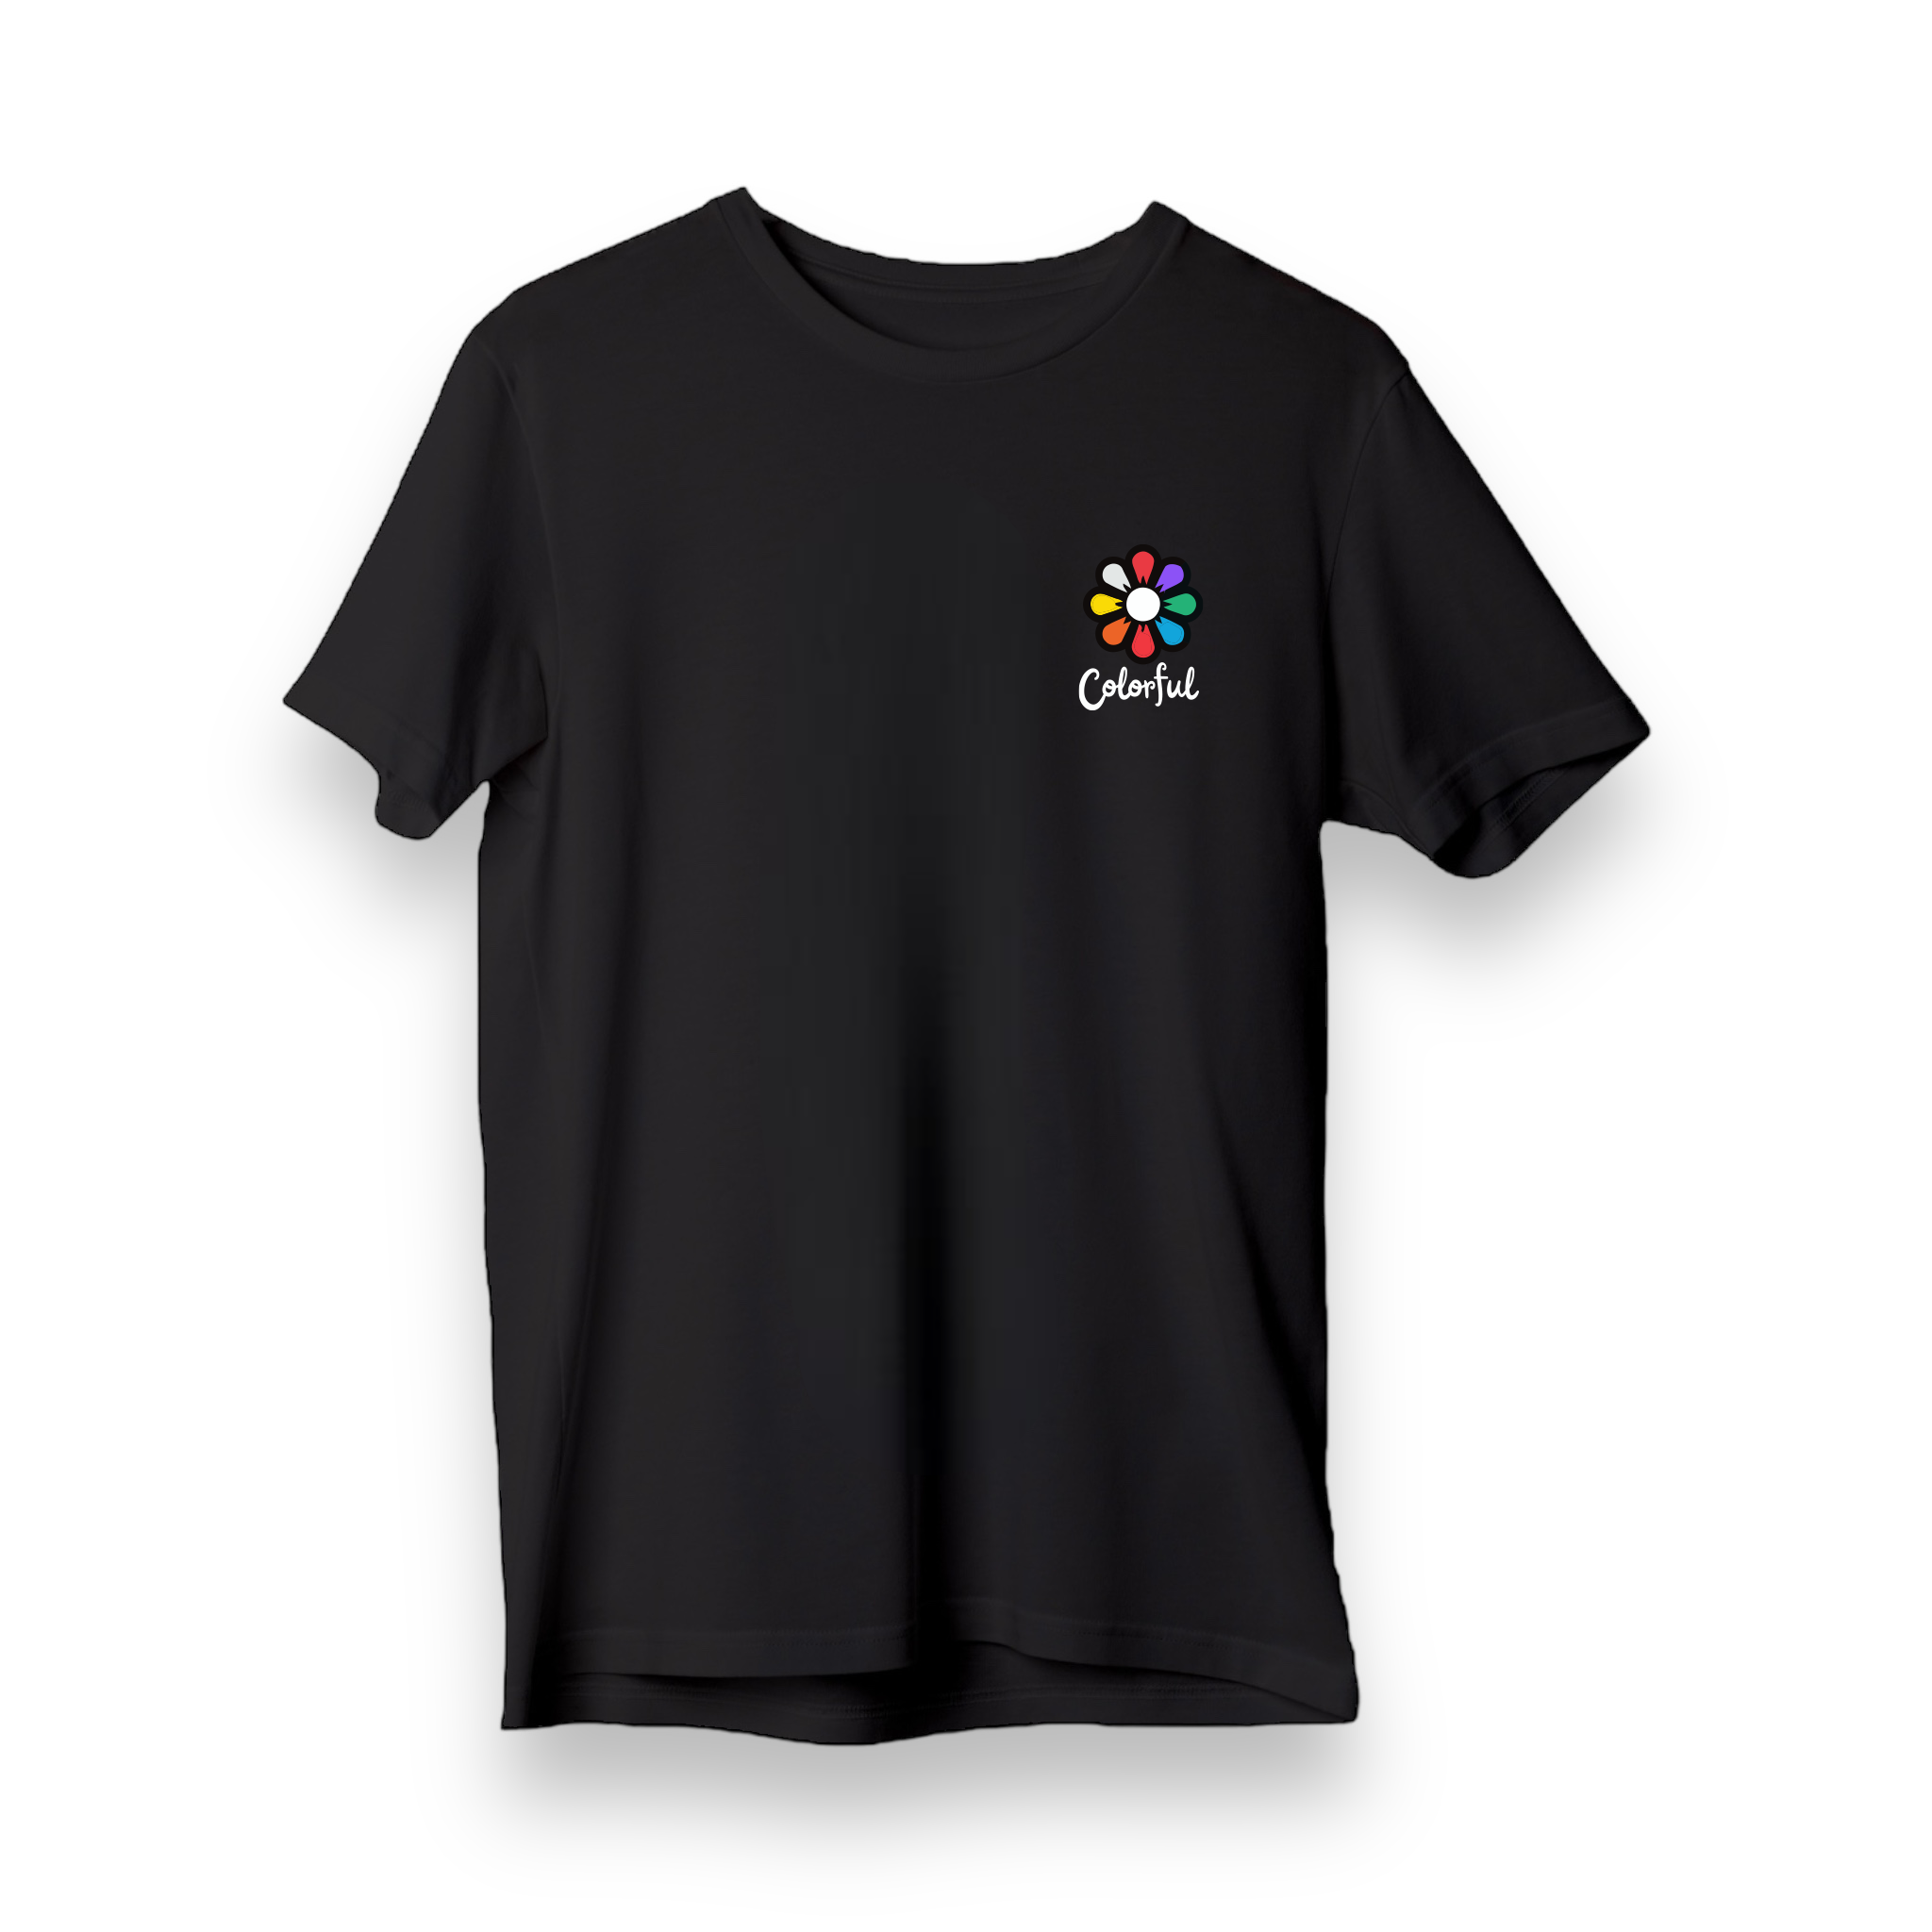 Colorful - Regular T-Shirt